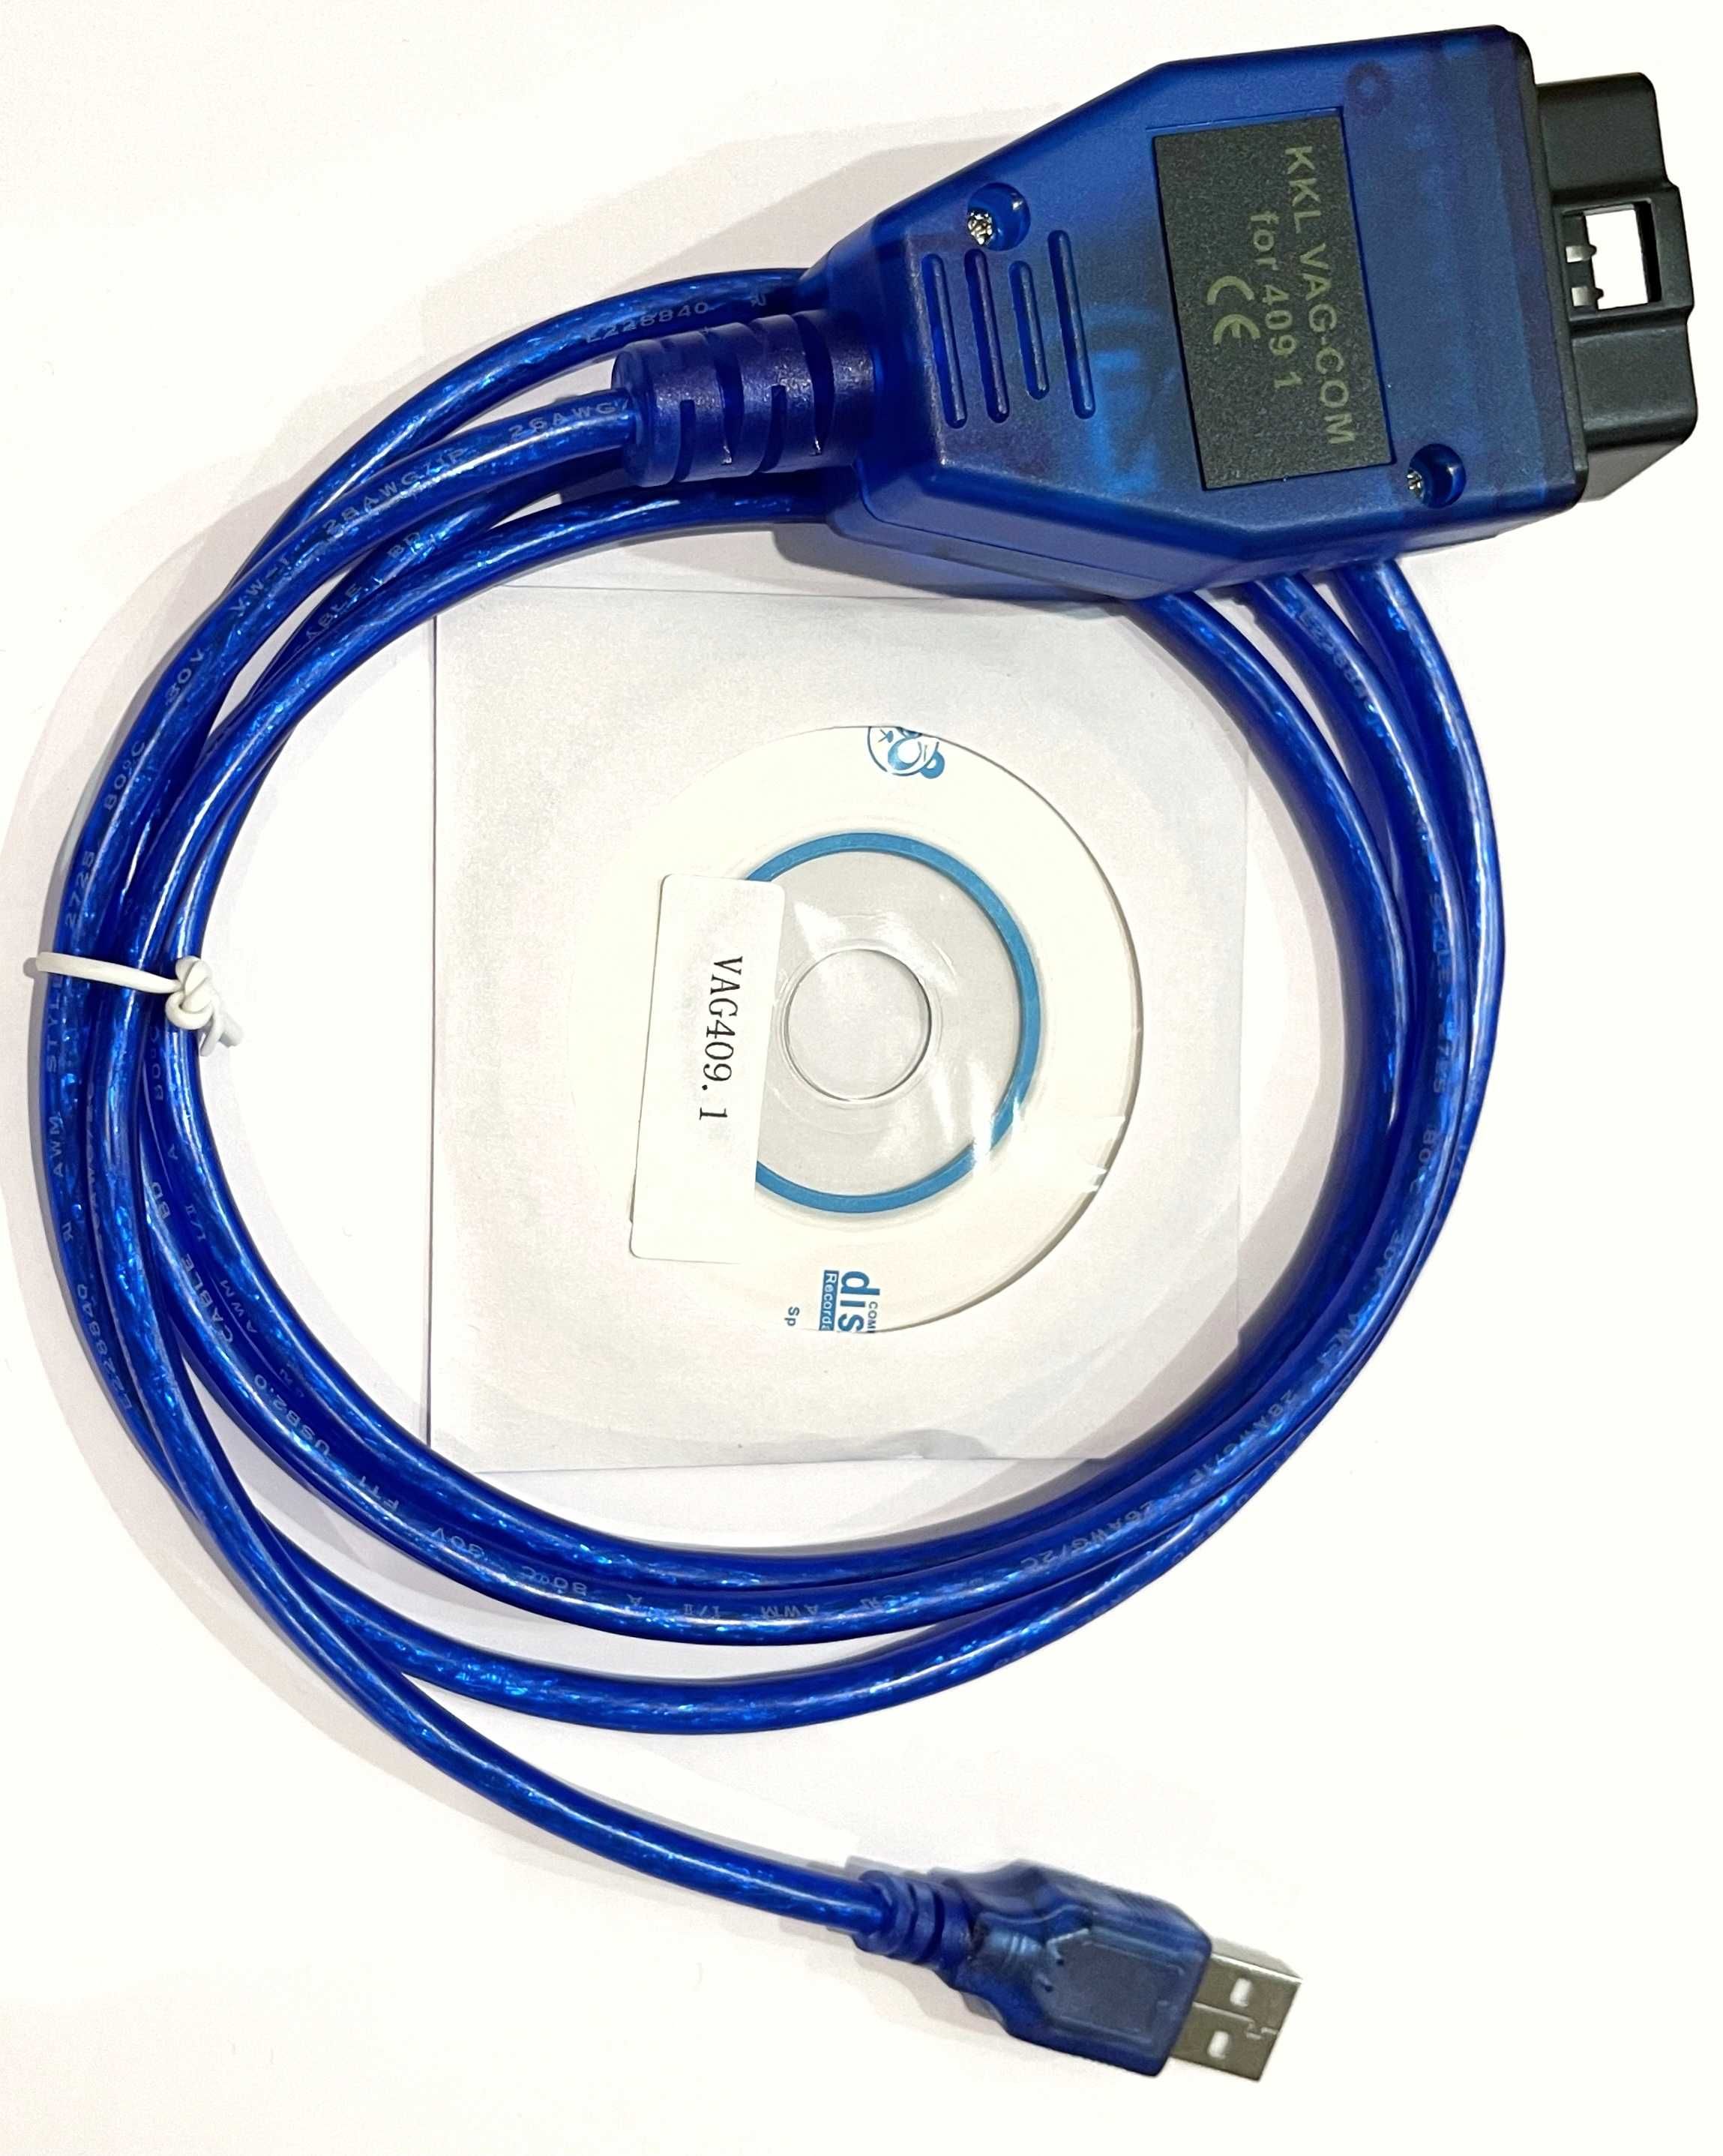 VAG-COM 409.1 KKL (чип FTDI) диагностический адаптер сканер OBD2 USB